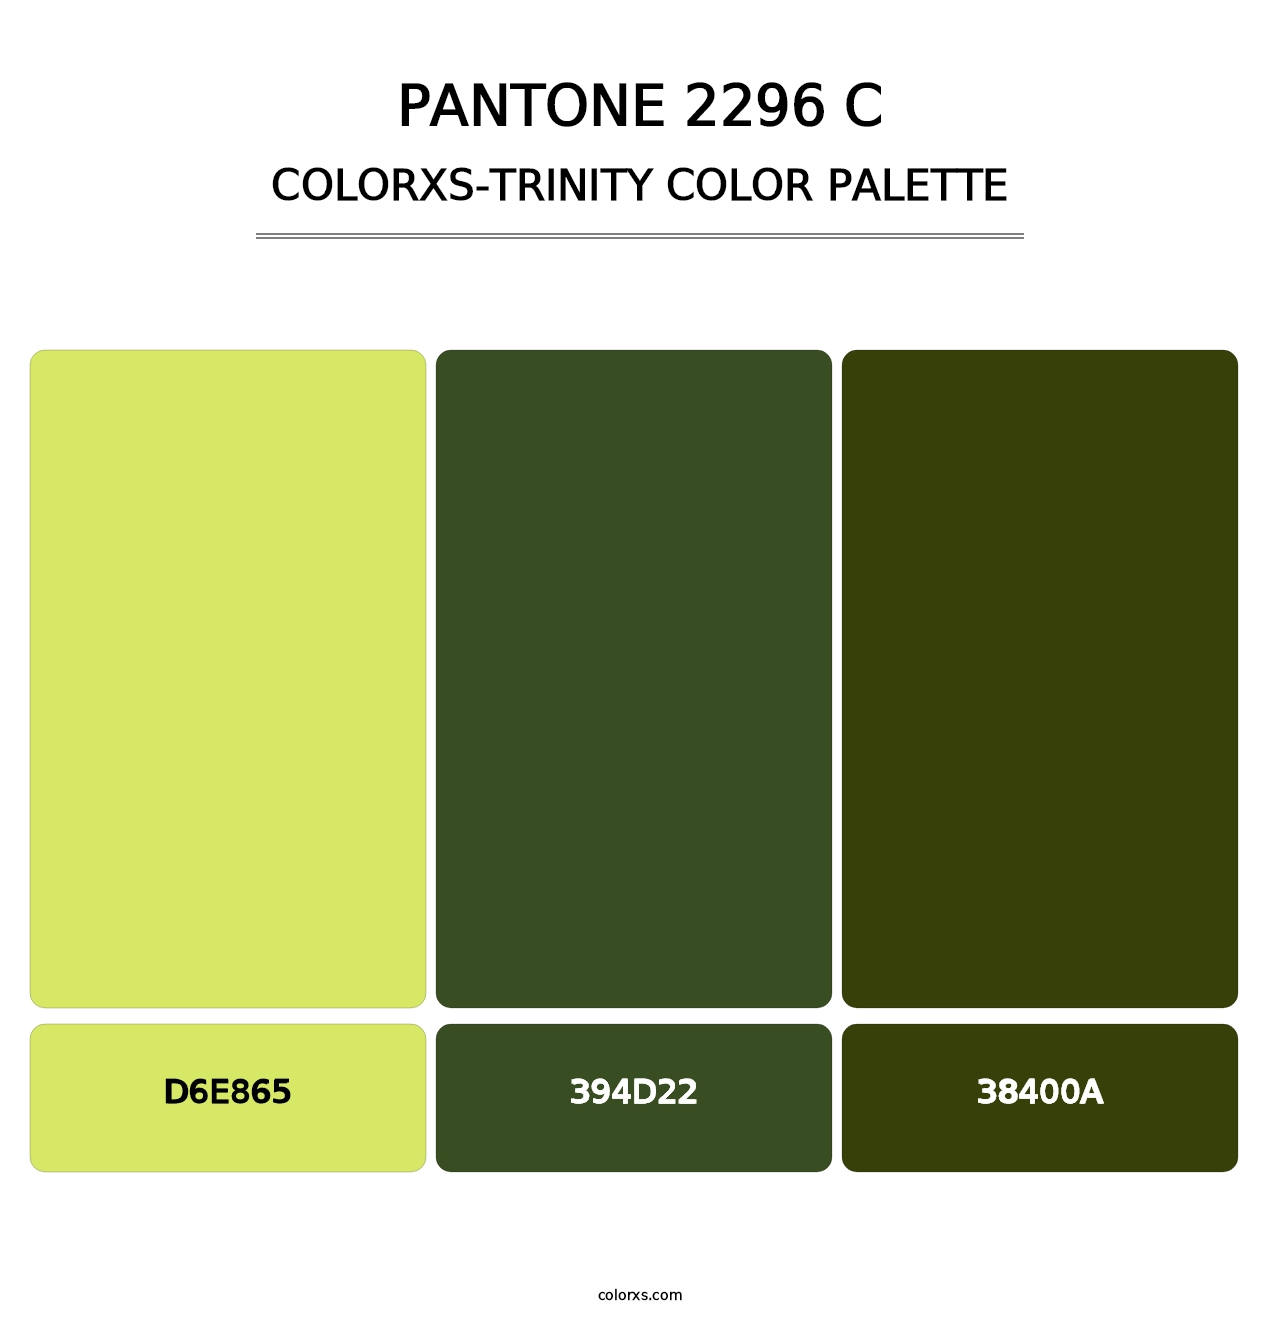 PANTONE 2296 C - Colorxs Trinity Palette